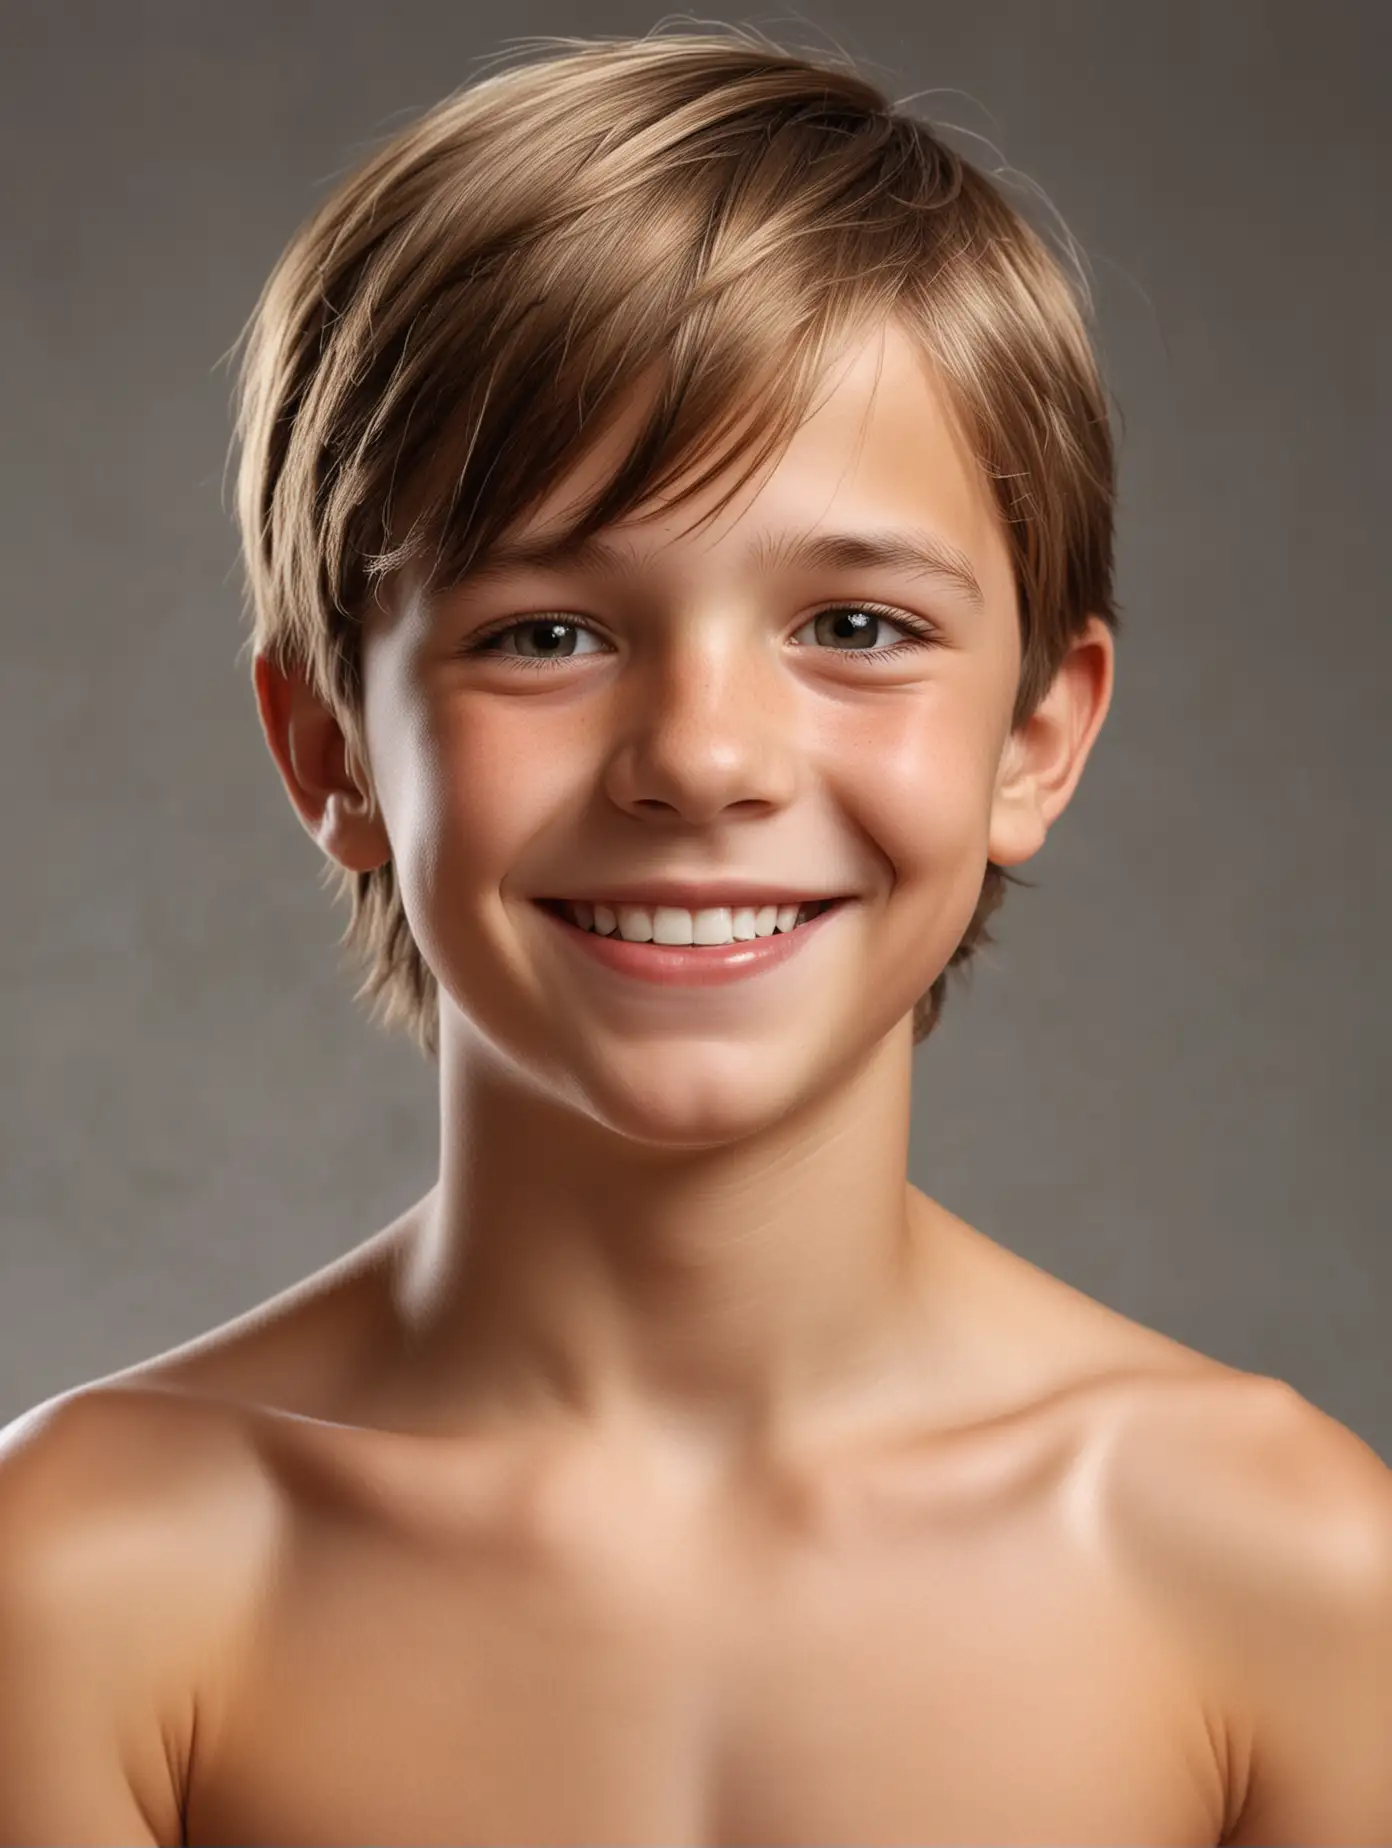 Smiling ThirteenYearOld Boy with Shiny Straight Hair